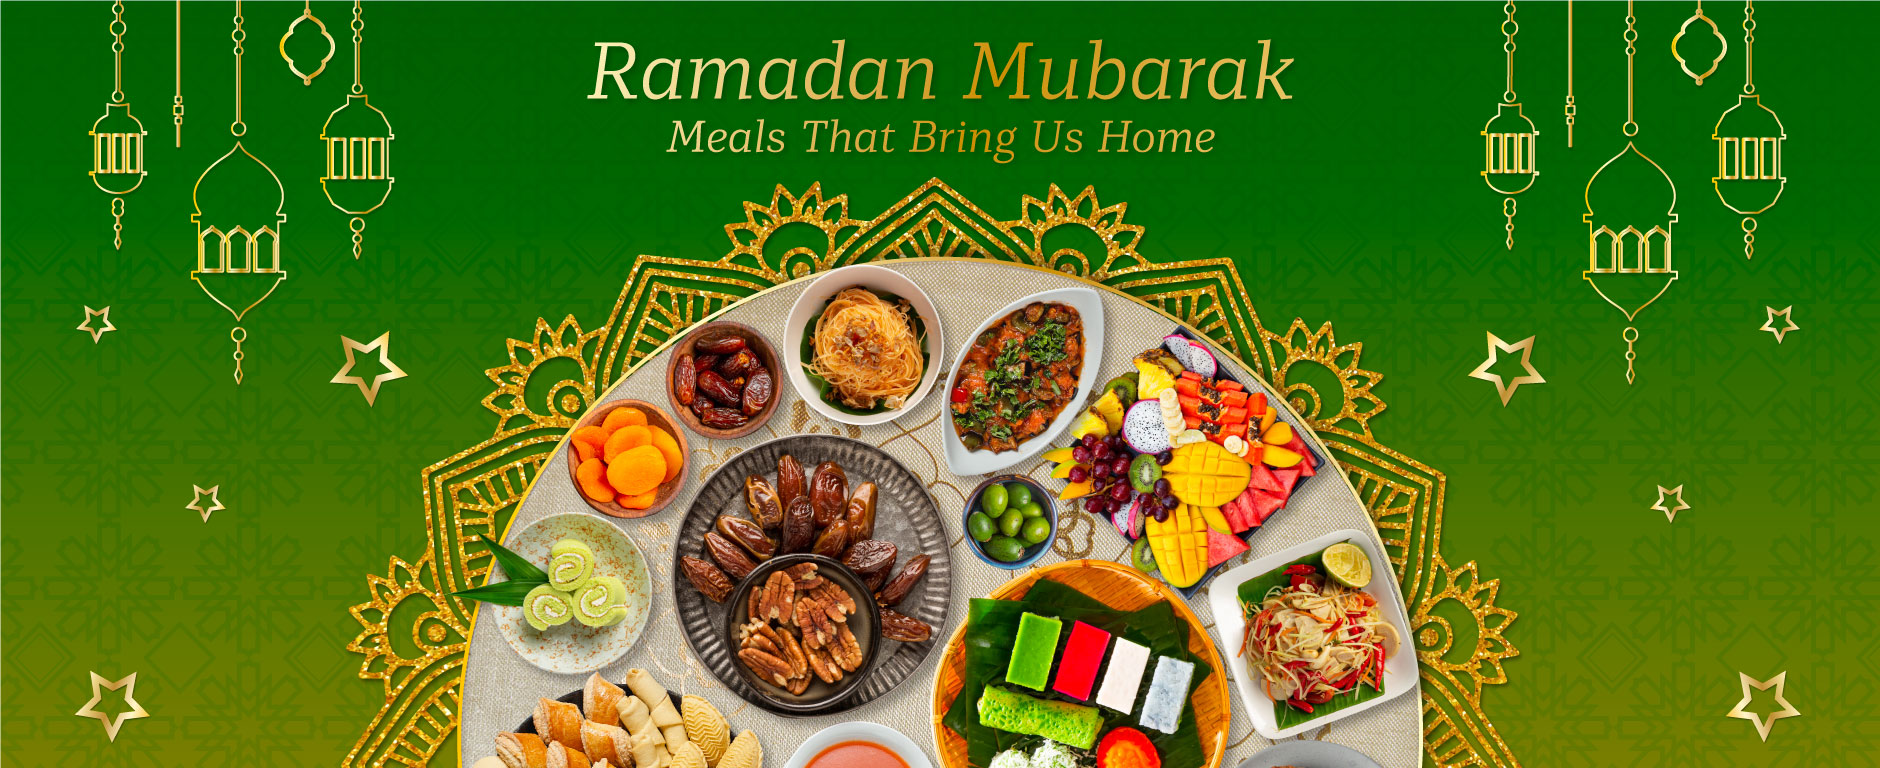 Savor Ramadan's Warmth!